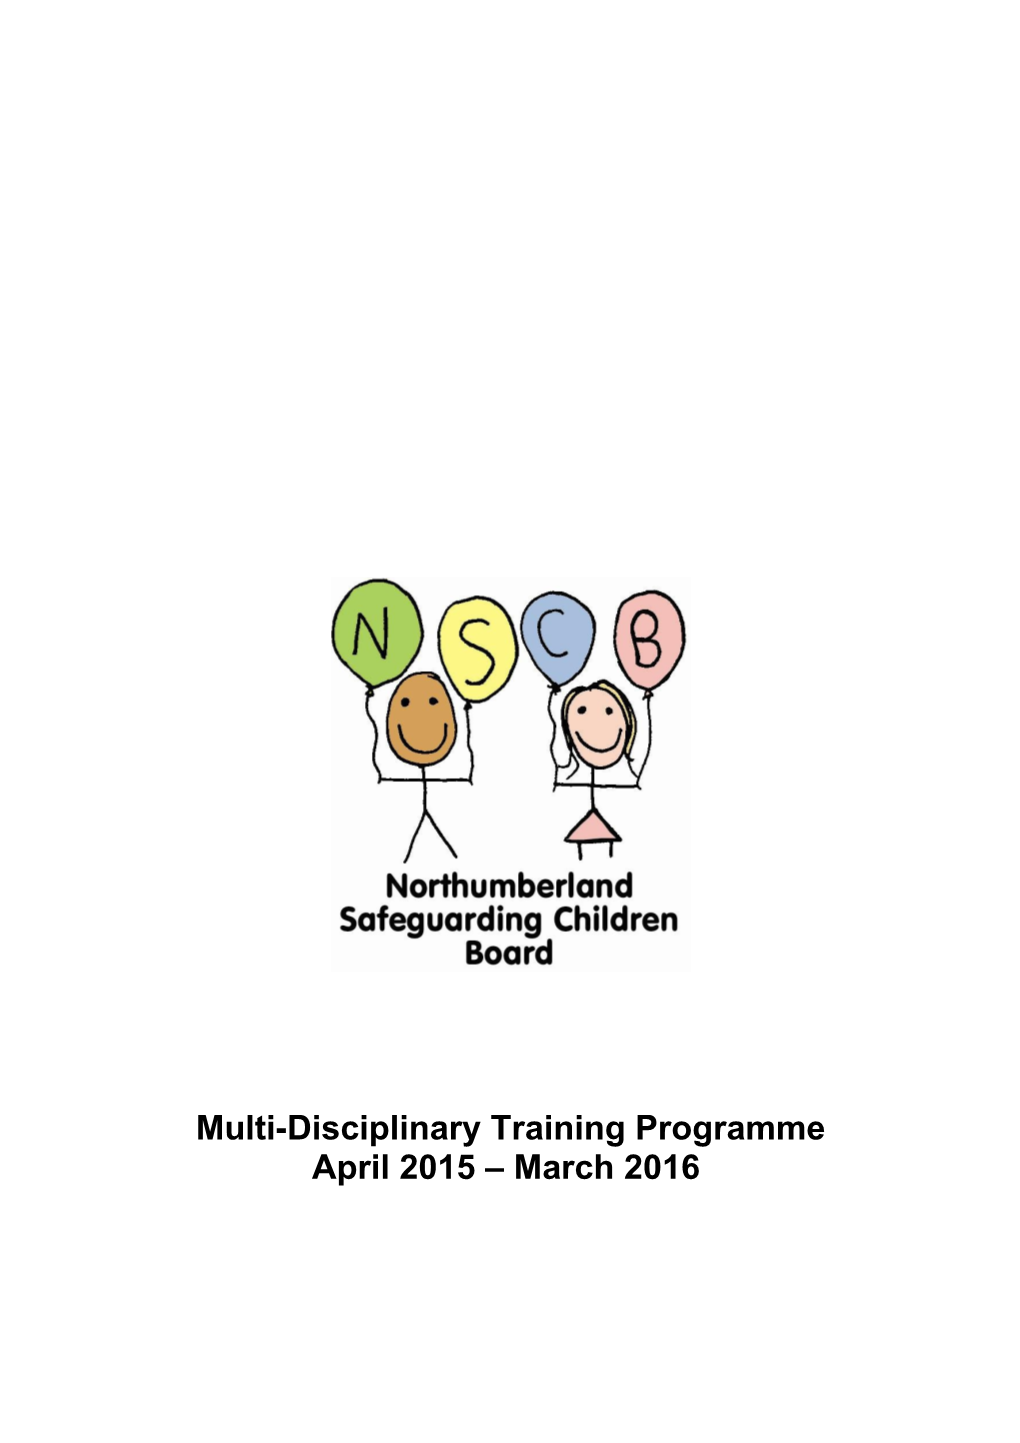 Multi-Disciplinary Training Programme